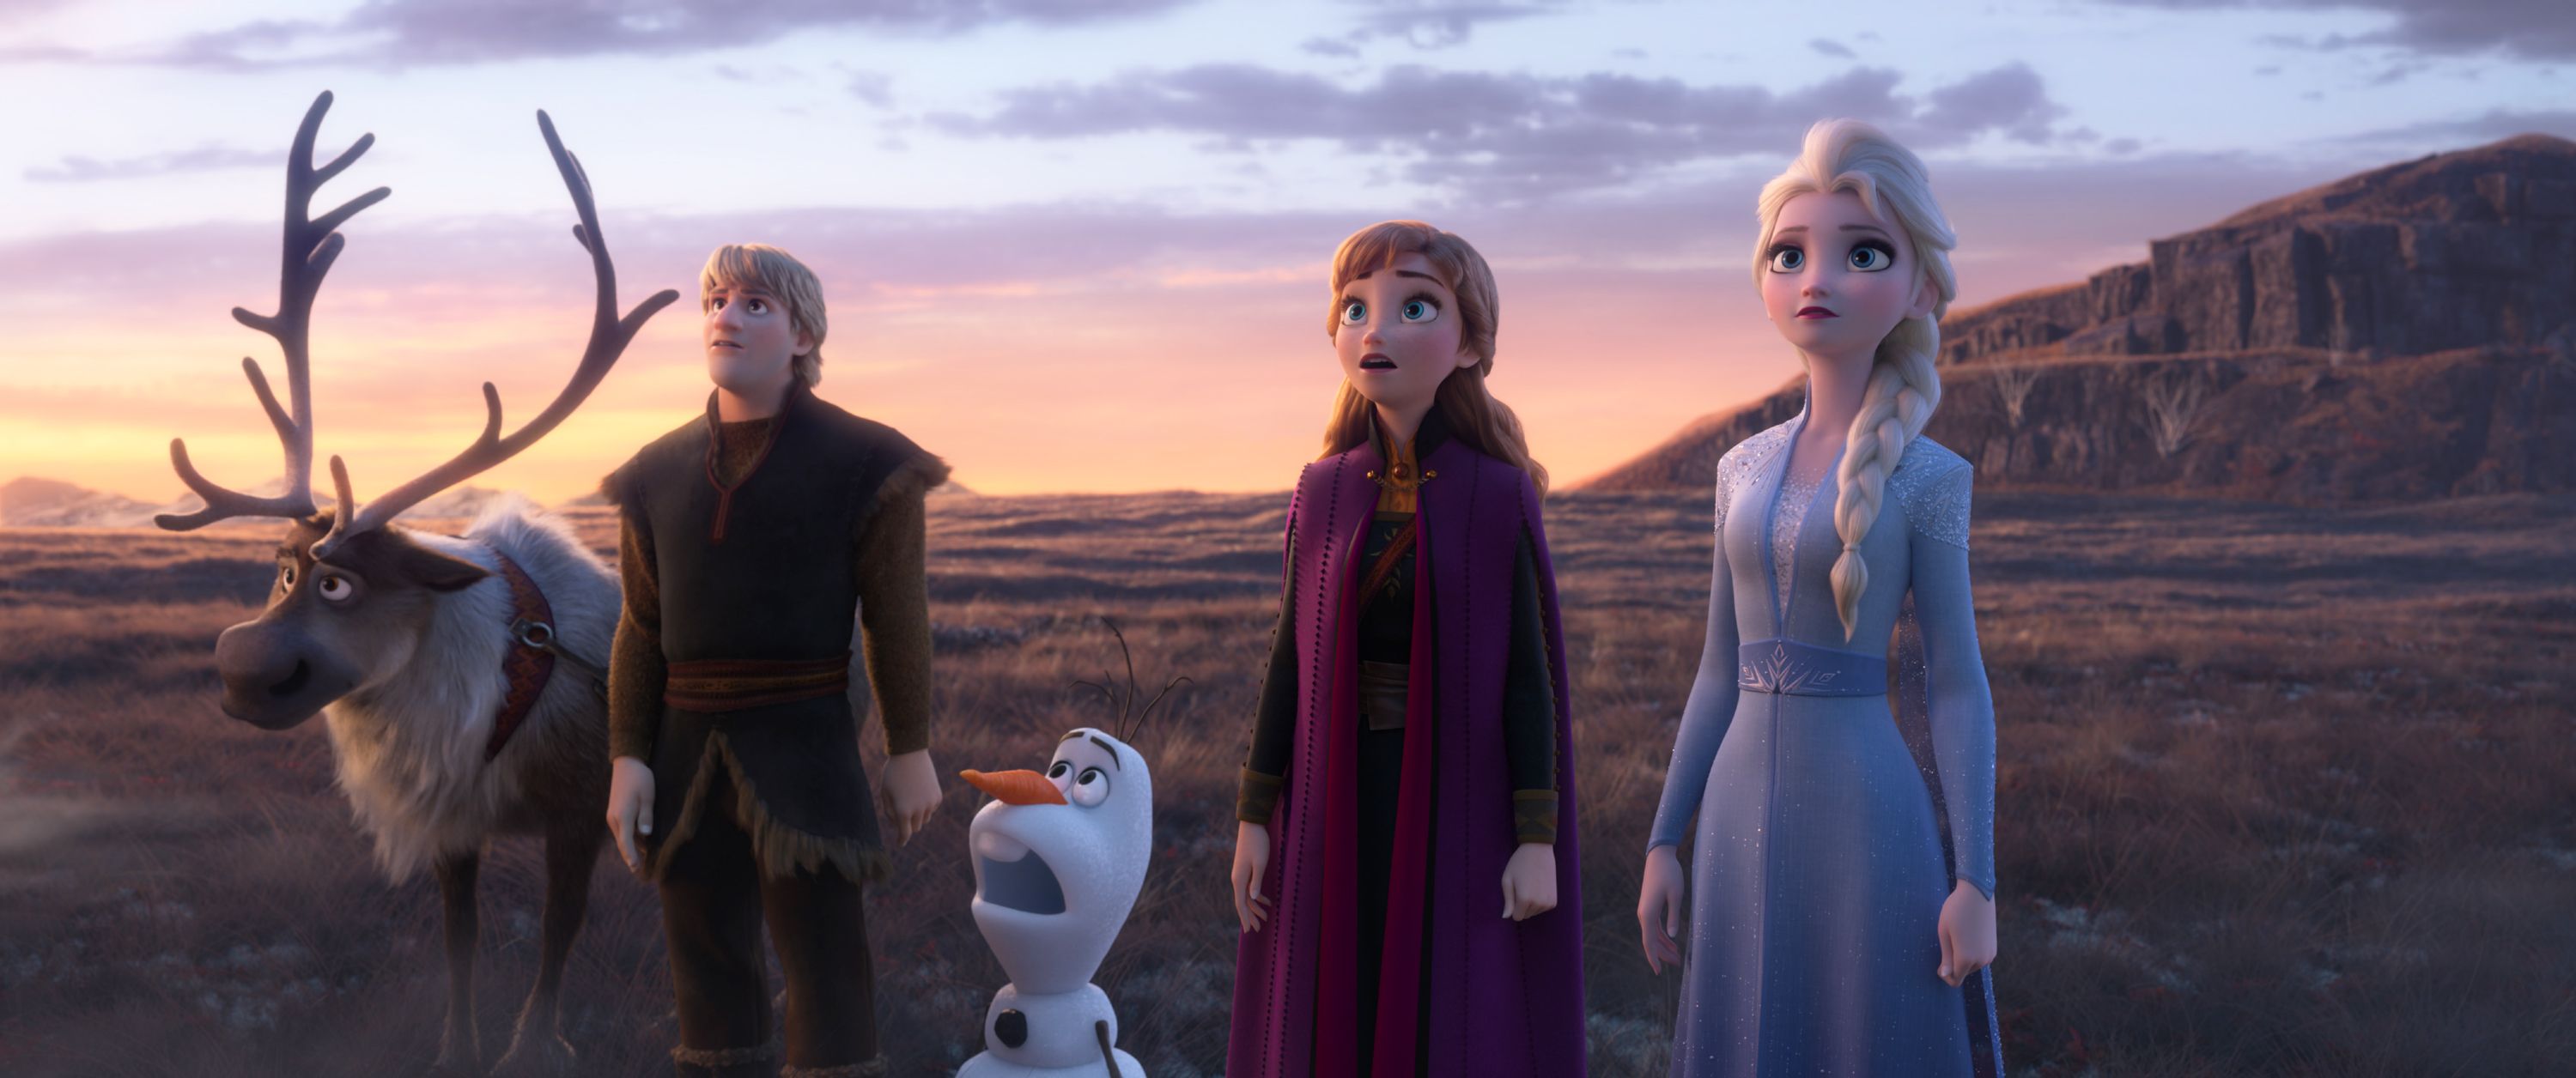 Frozen 2's Kristoff - how Disney subverts Prince Charming